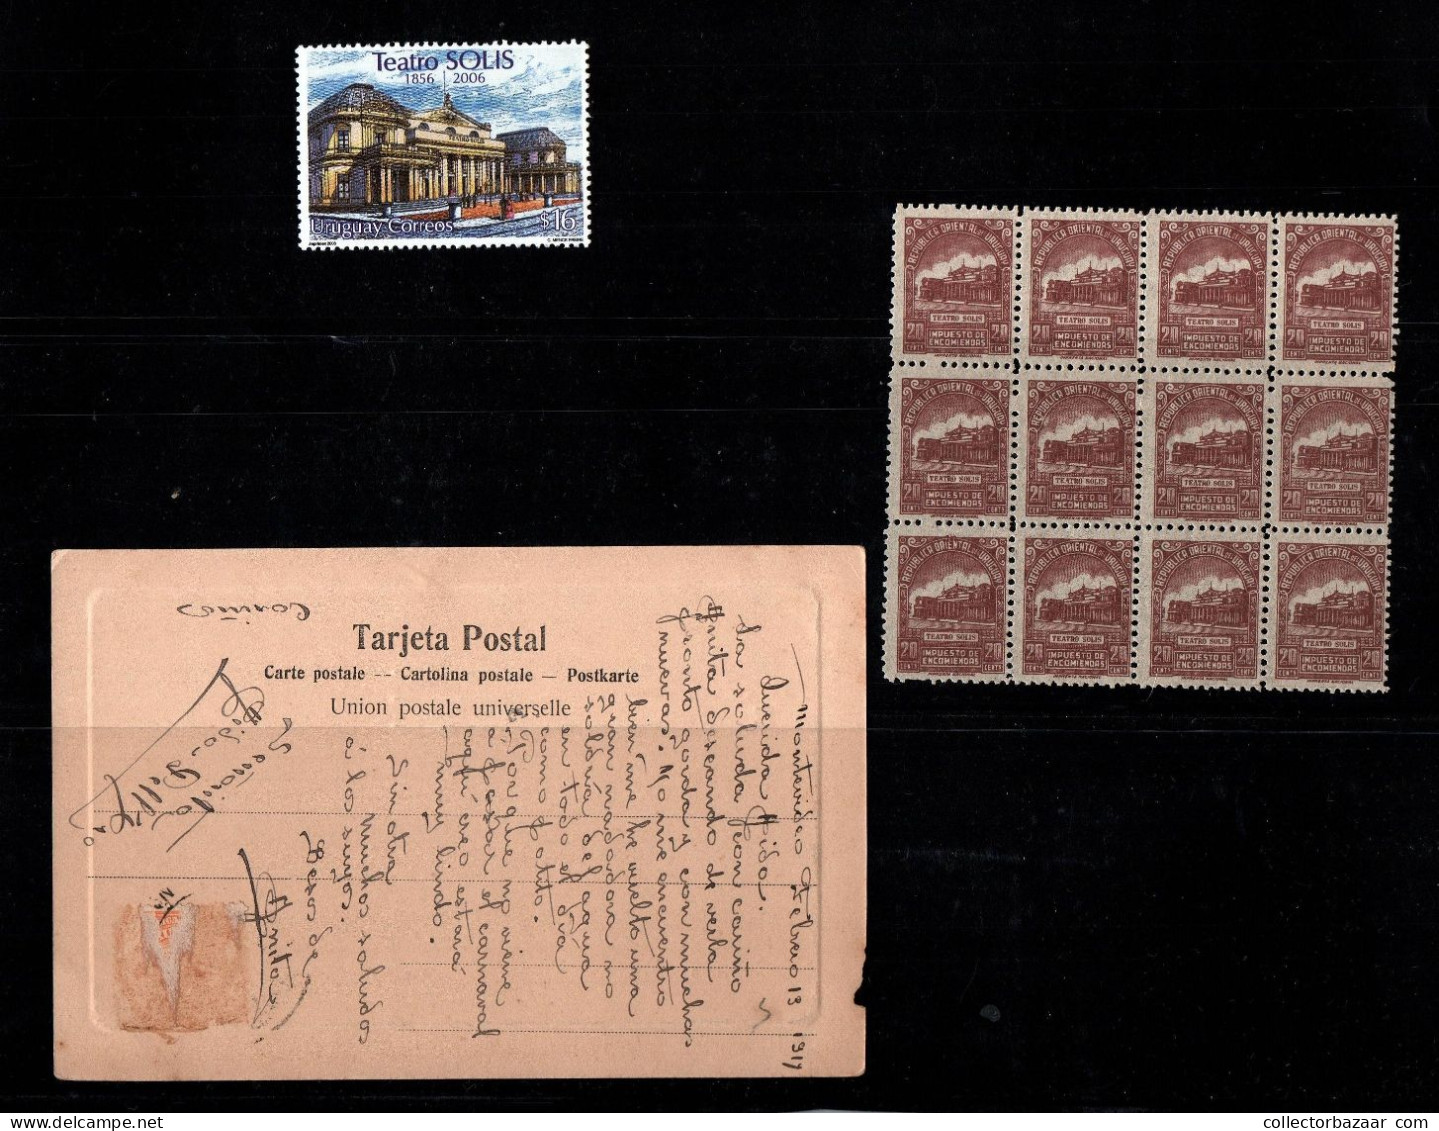 Solis Theatre Uruguay Stamps Postcard Collection Epitome Of Masonic Architecture Freemasonry - Freemasonry